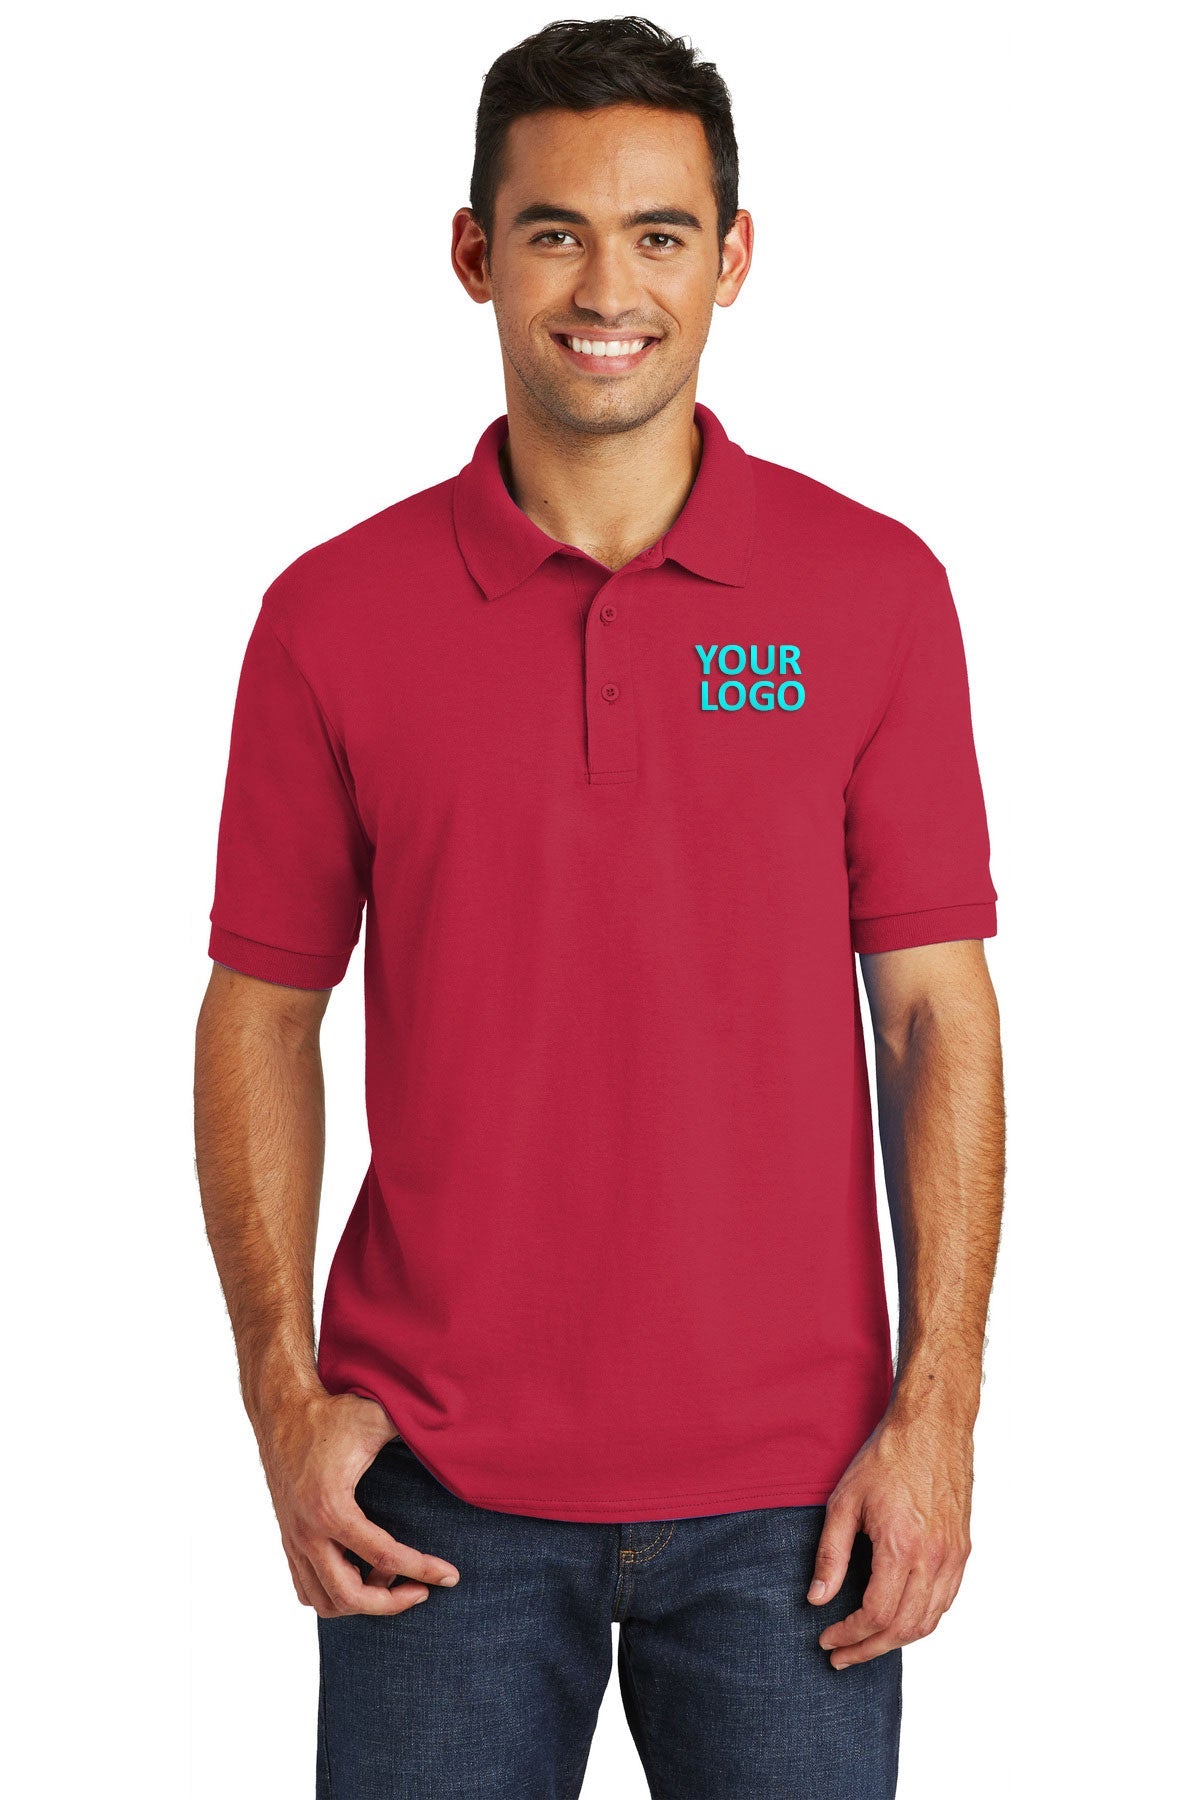 port & company red kp55 custom logo polo shirts embroidered